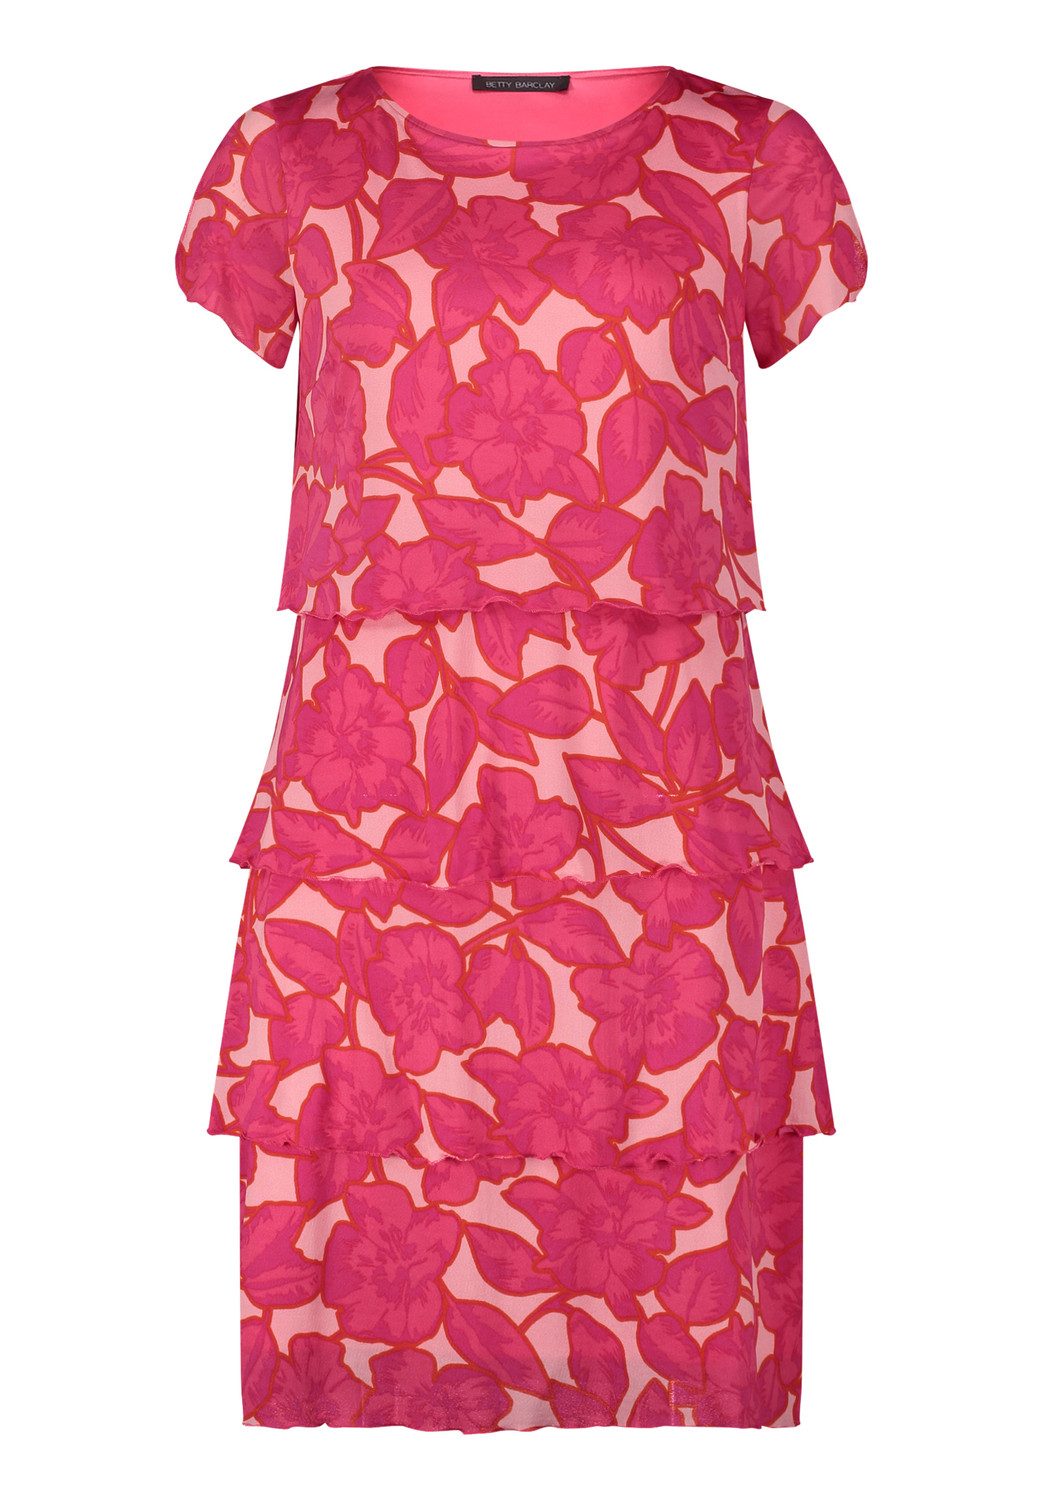 Betty Barclay Sommerkleid Kleid Kurz 1/2 Arm, Pink/Rosé